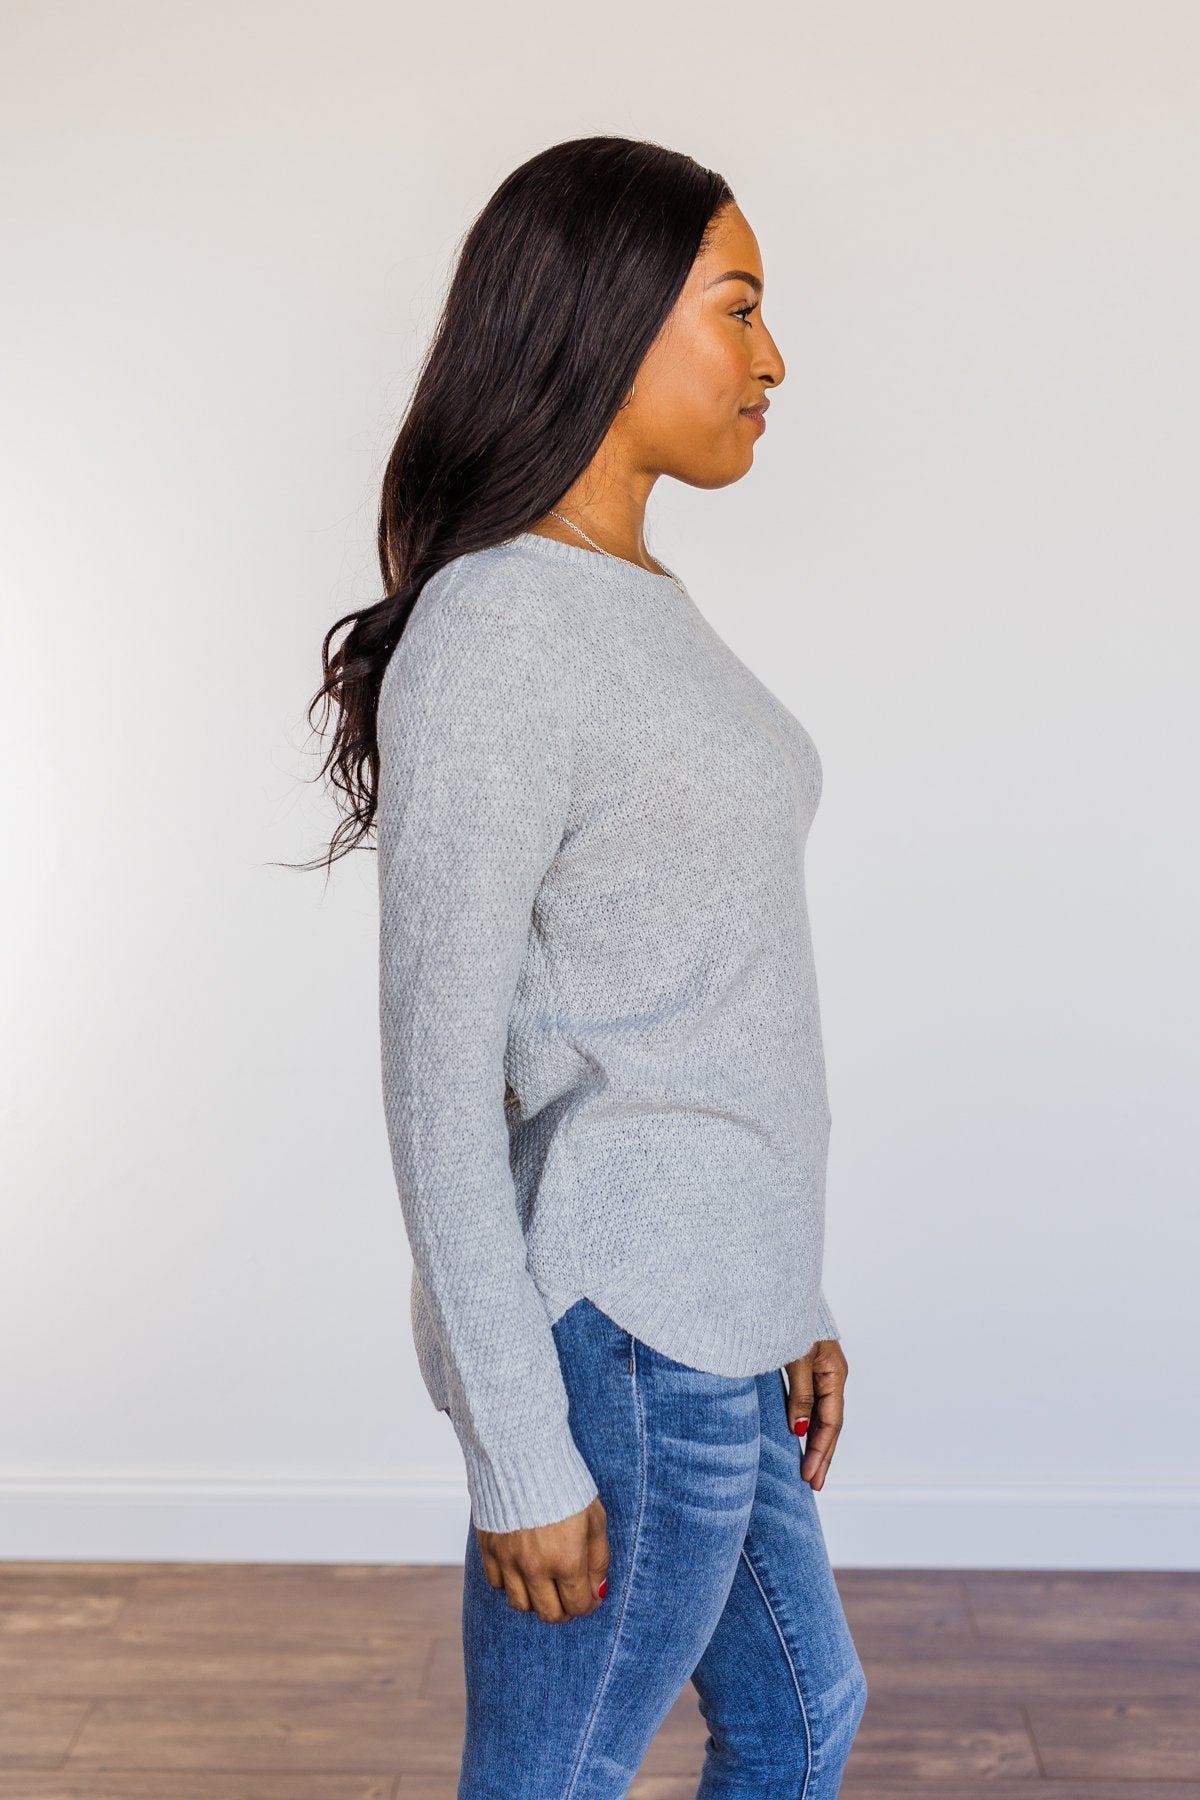 Runway Beauty Knit Sweater- Light Grey